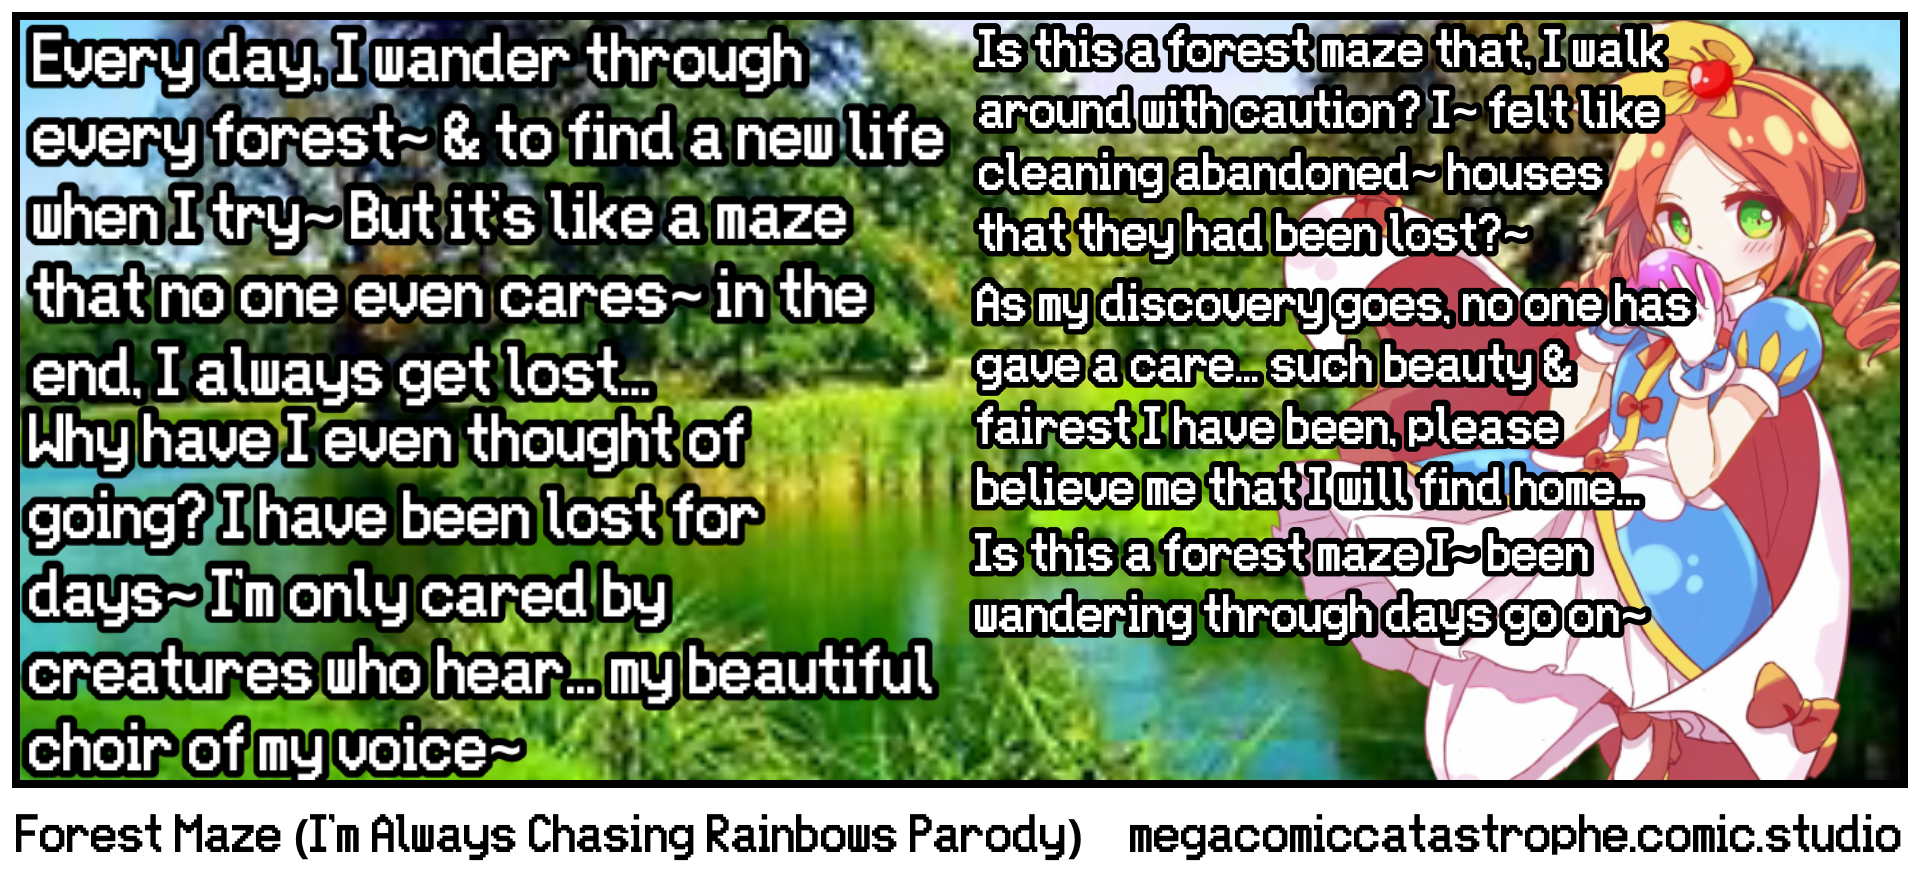 Forest Maze (I’m Always Chasing Rainbows Parody)